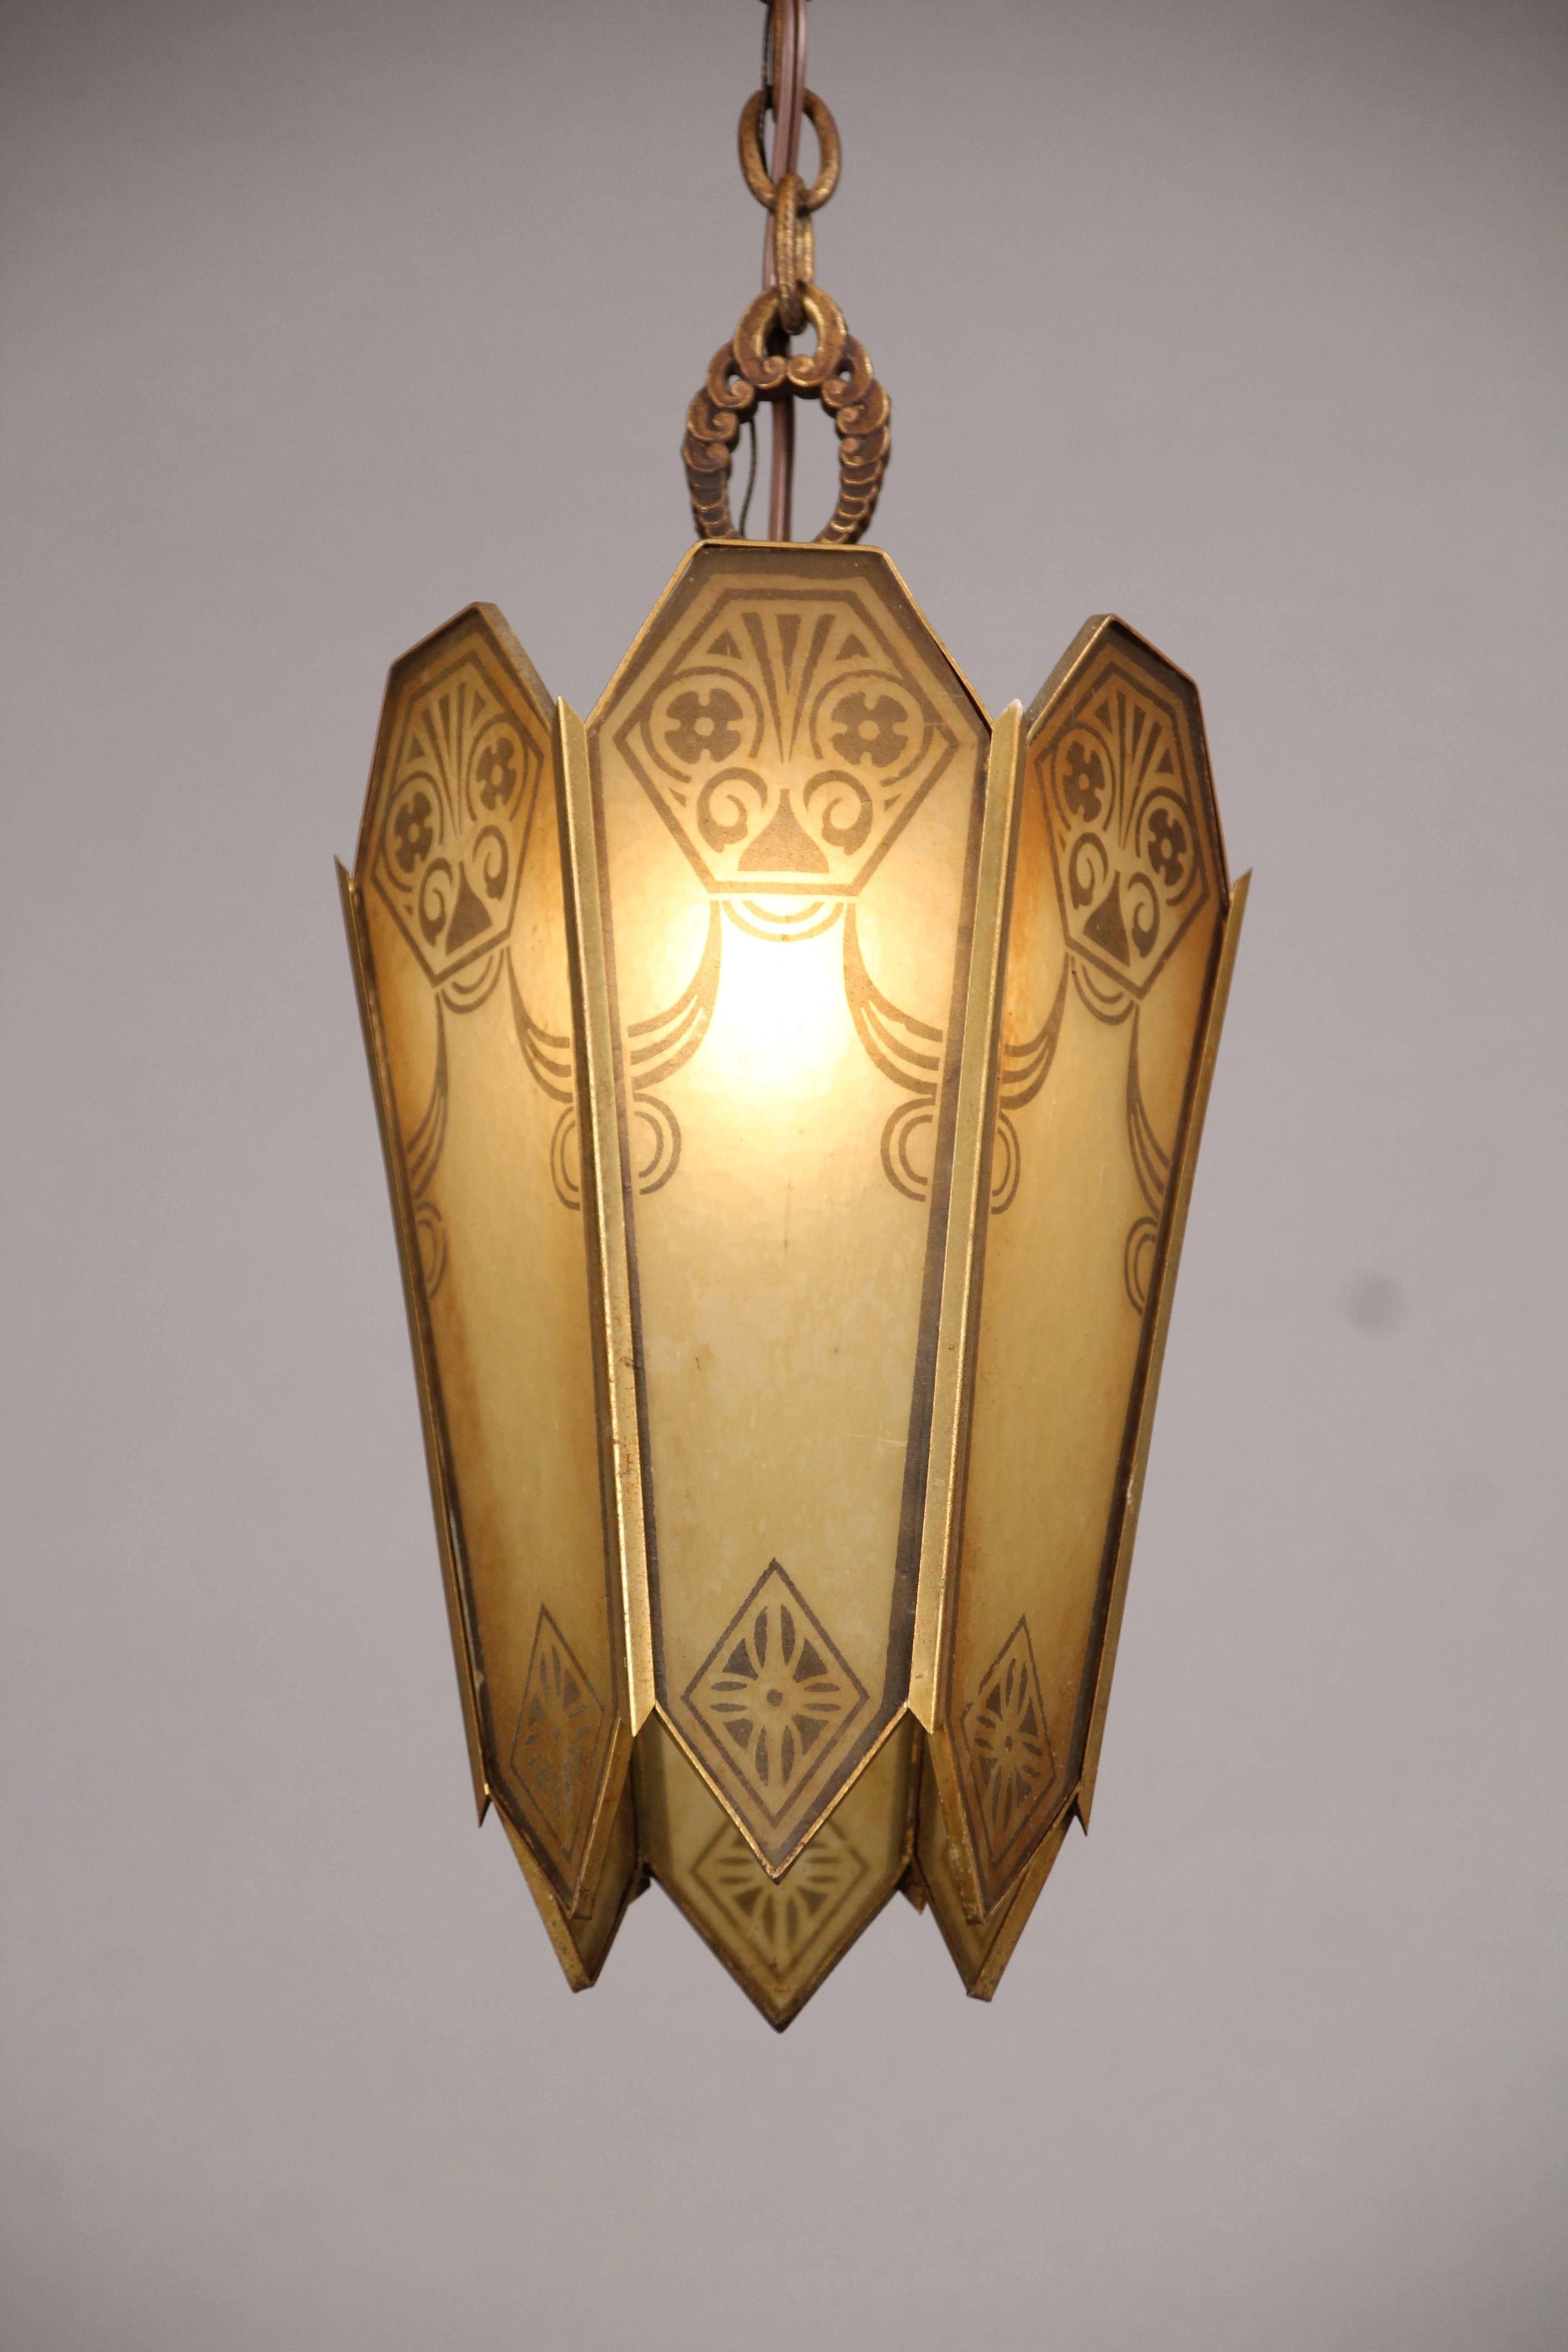 Wonderful Machine Age Art Deco pendant chandelier with original glass and original finish.